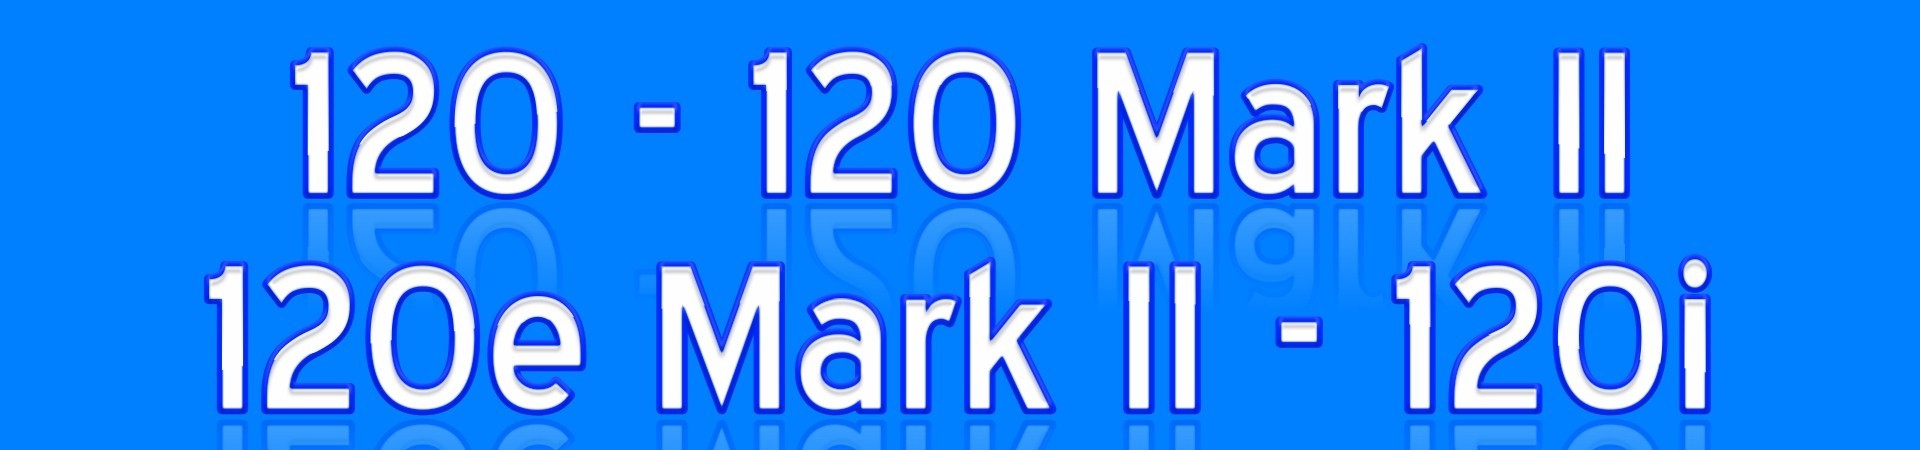 120 120 Mark II 120e Mark II 120i